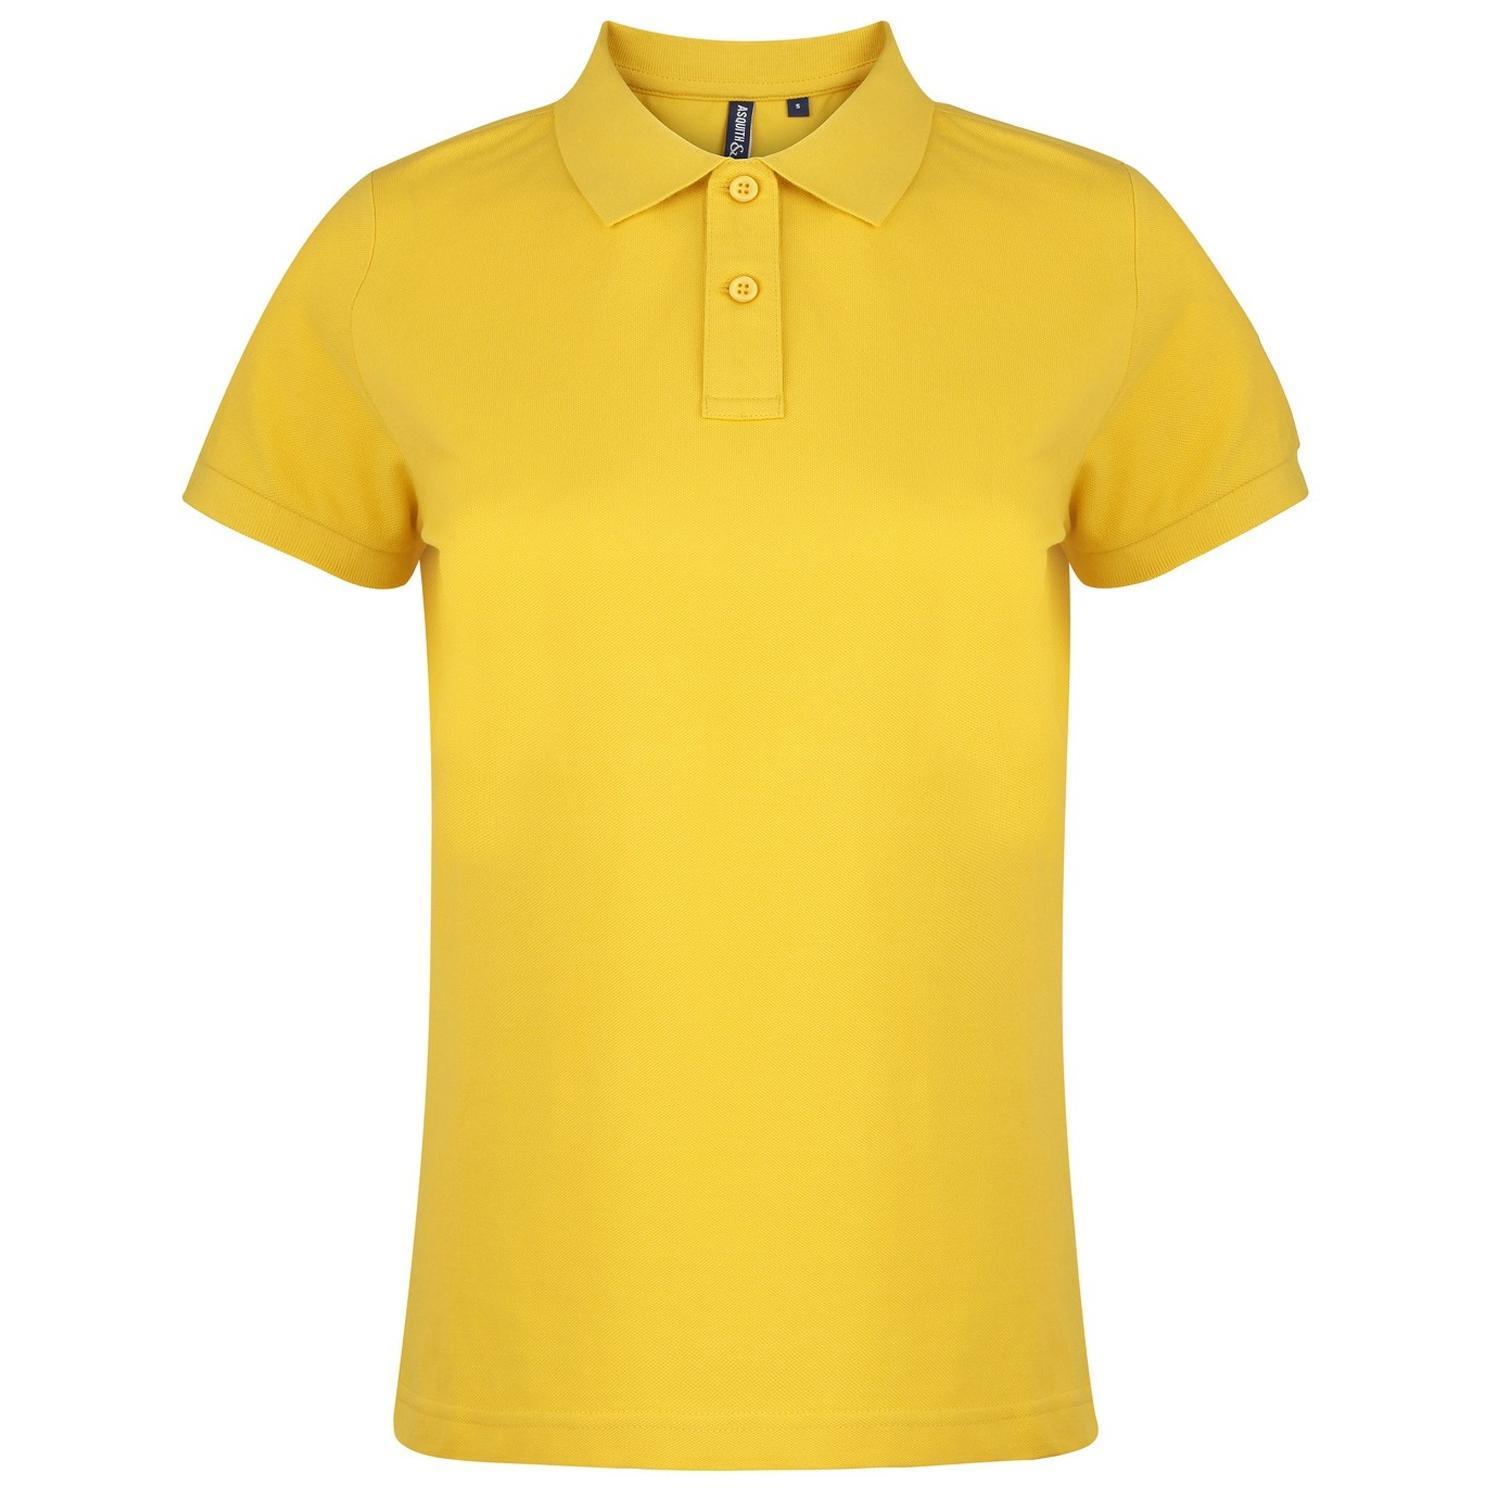 Asquith & Fox Womens/Ladies Plain Short Sleeve Polo Shirt (Sunflower) (XL)